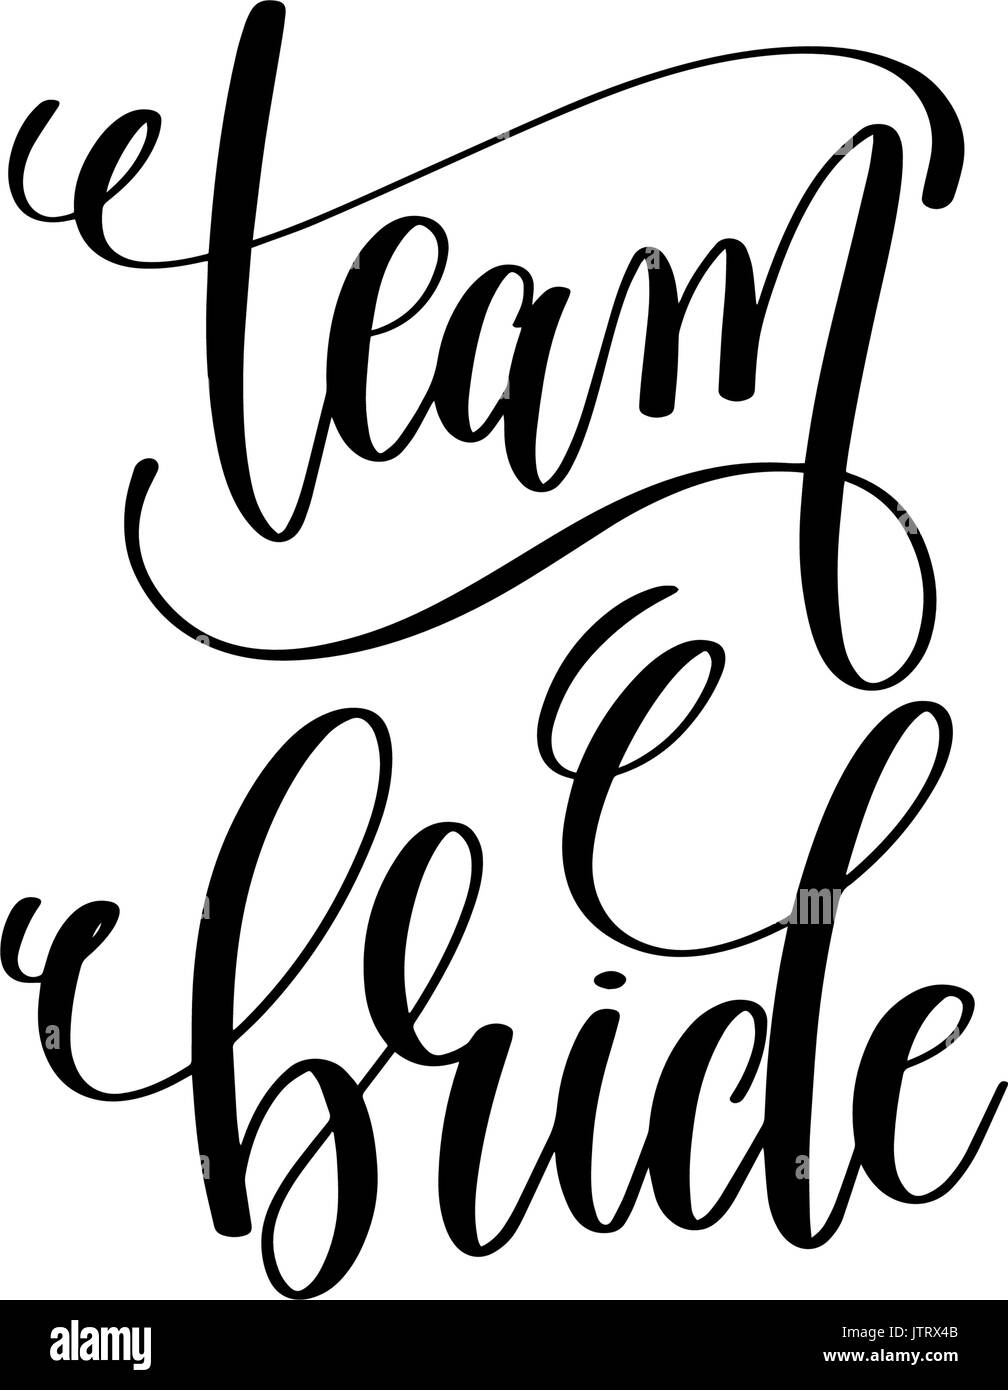 Free Vector  Flat design team bride lettering